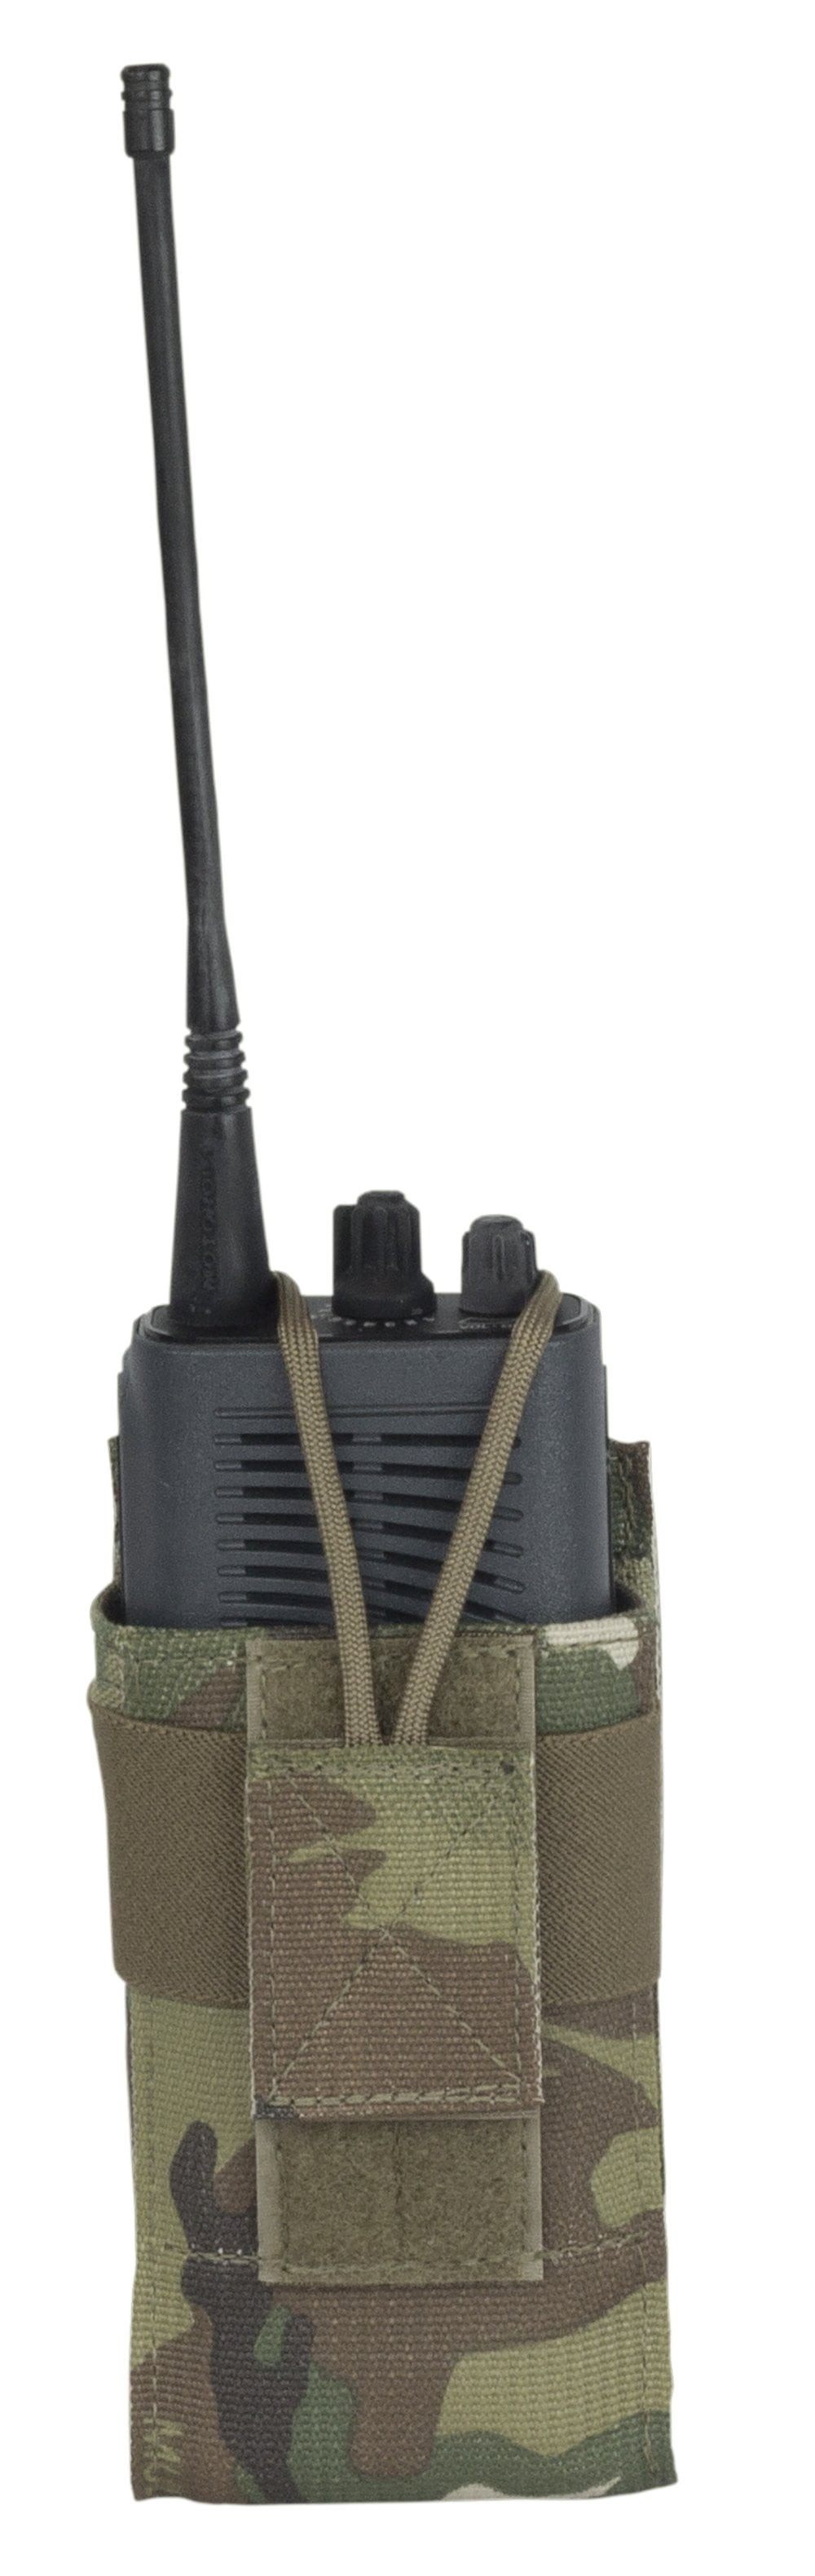 Duty Gear Walkie Holder Talkie Bag Pouches Military Lightweight Radio Molle Hot 